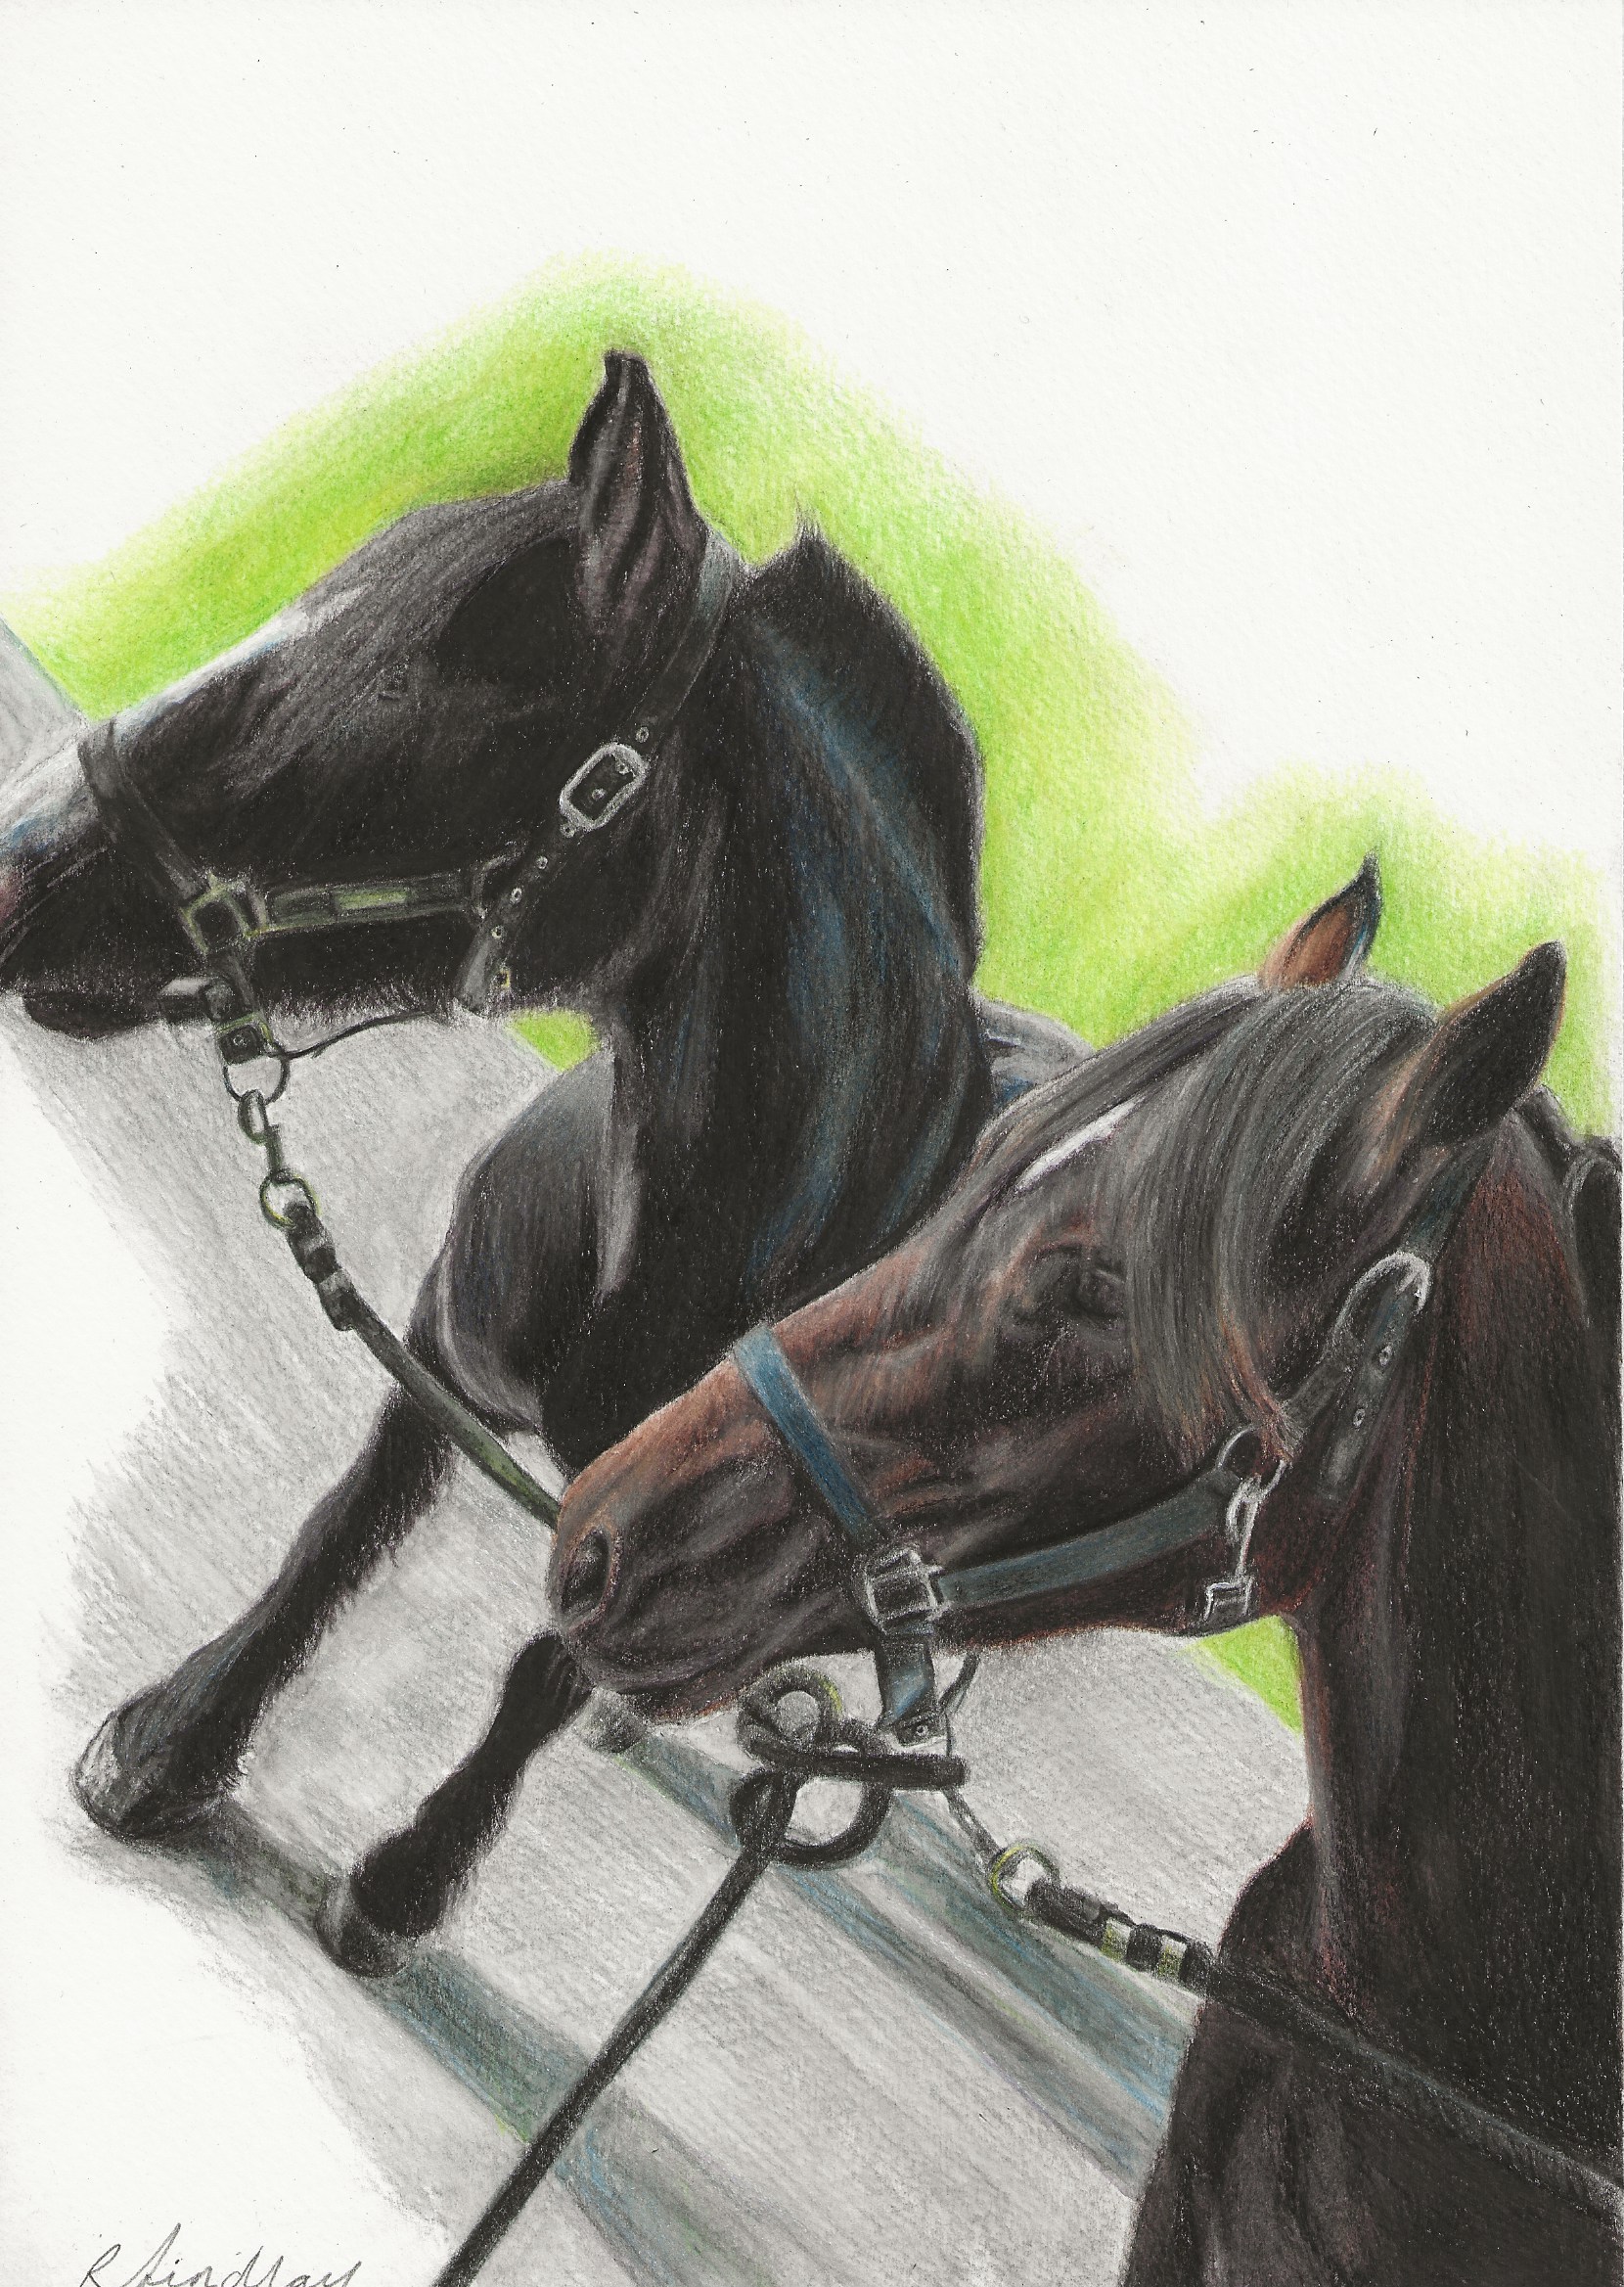 This is a pet portrait commission. It shows two horses stood.